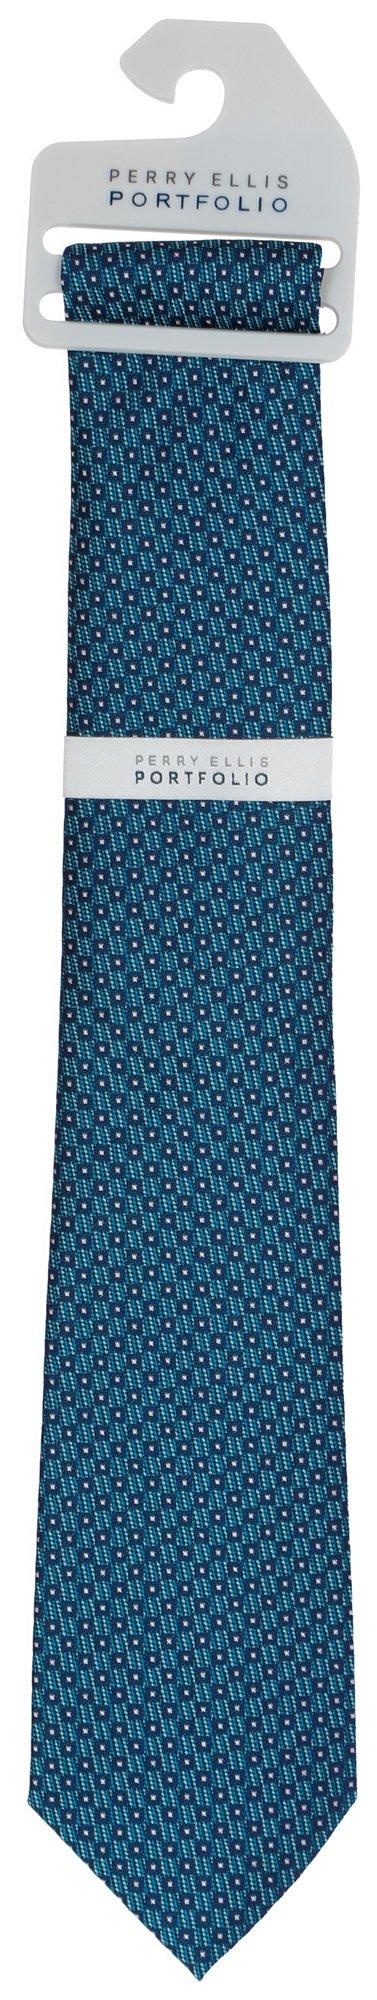 Blue Spotted Pattern Neck Tie